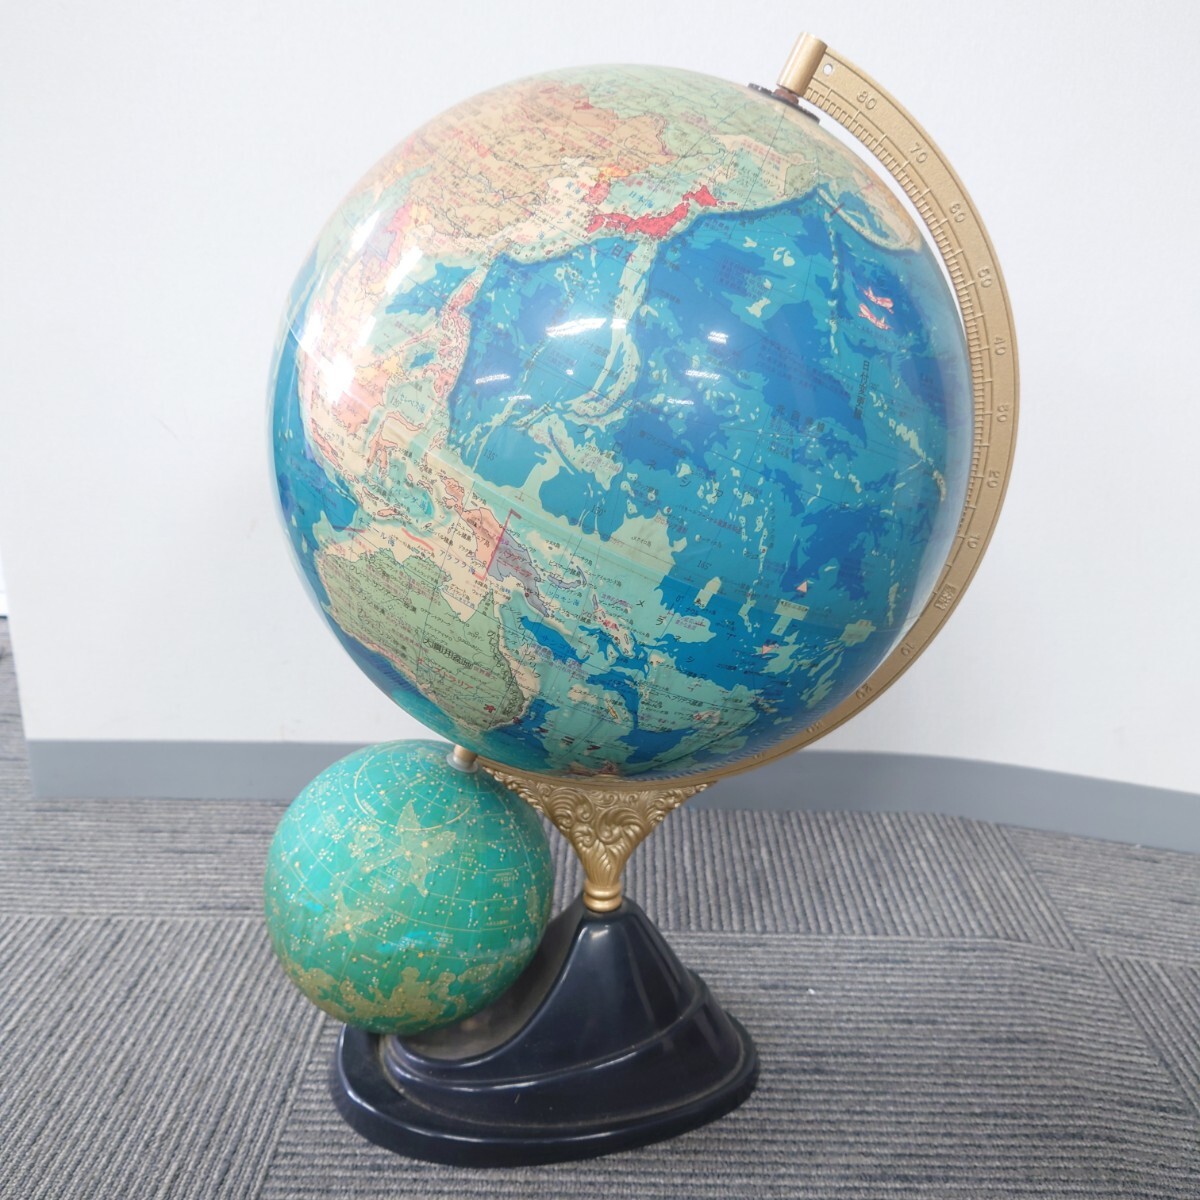 I750 地球儀 天球儀 世界地図 地図 地理 学習 アンティーク インテリア オブジェ 中古 ジャンク品 訳ありの画像1